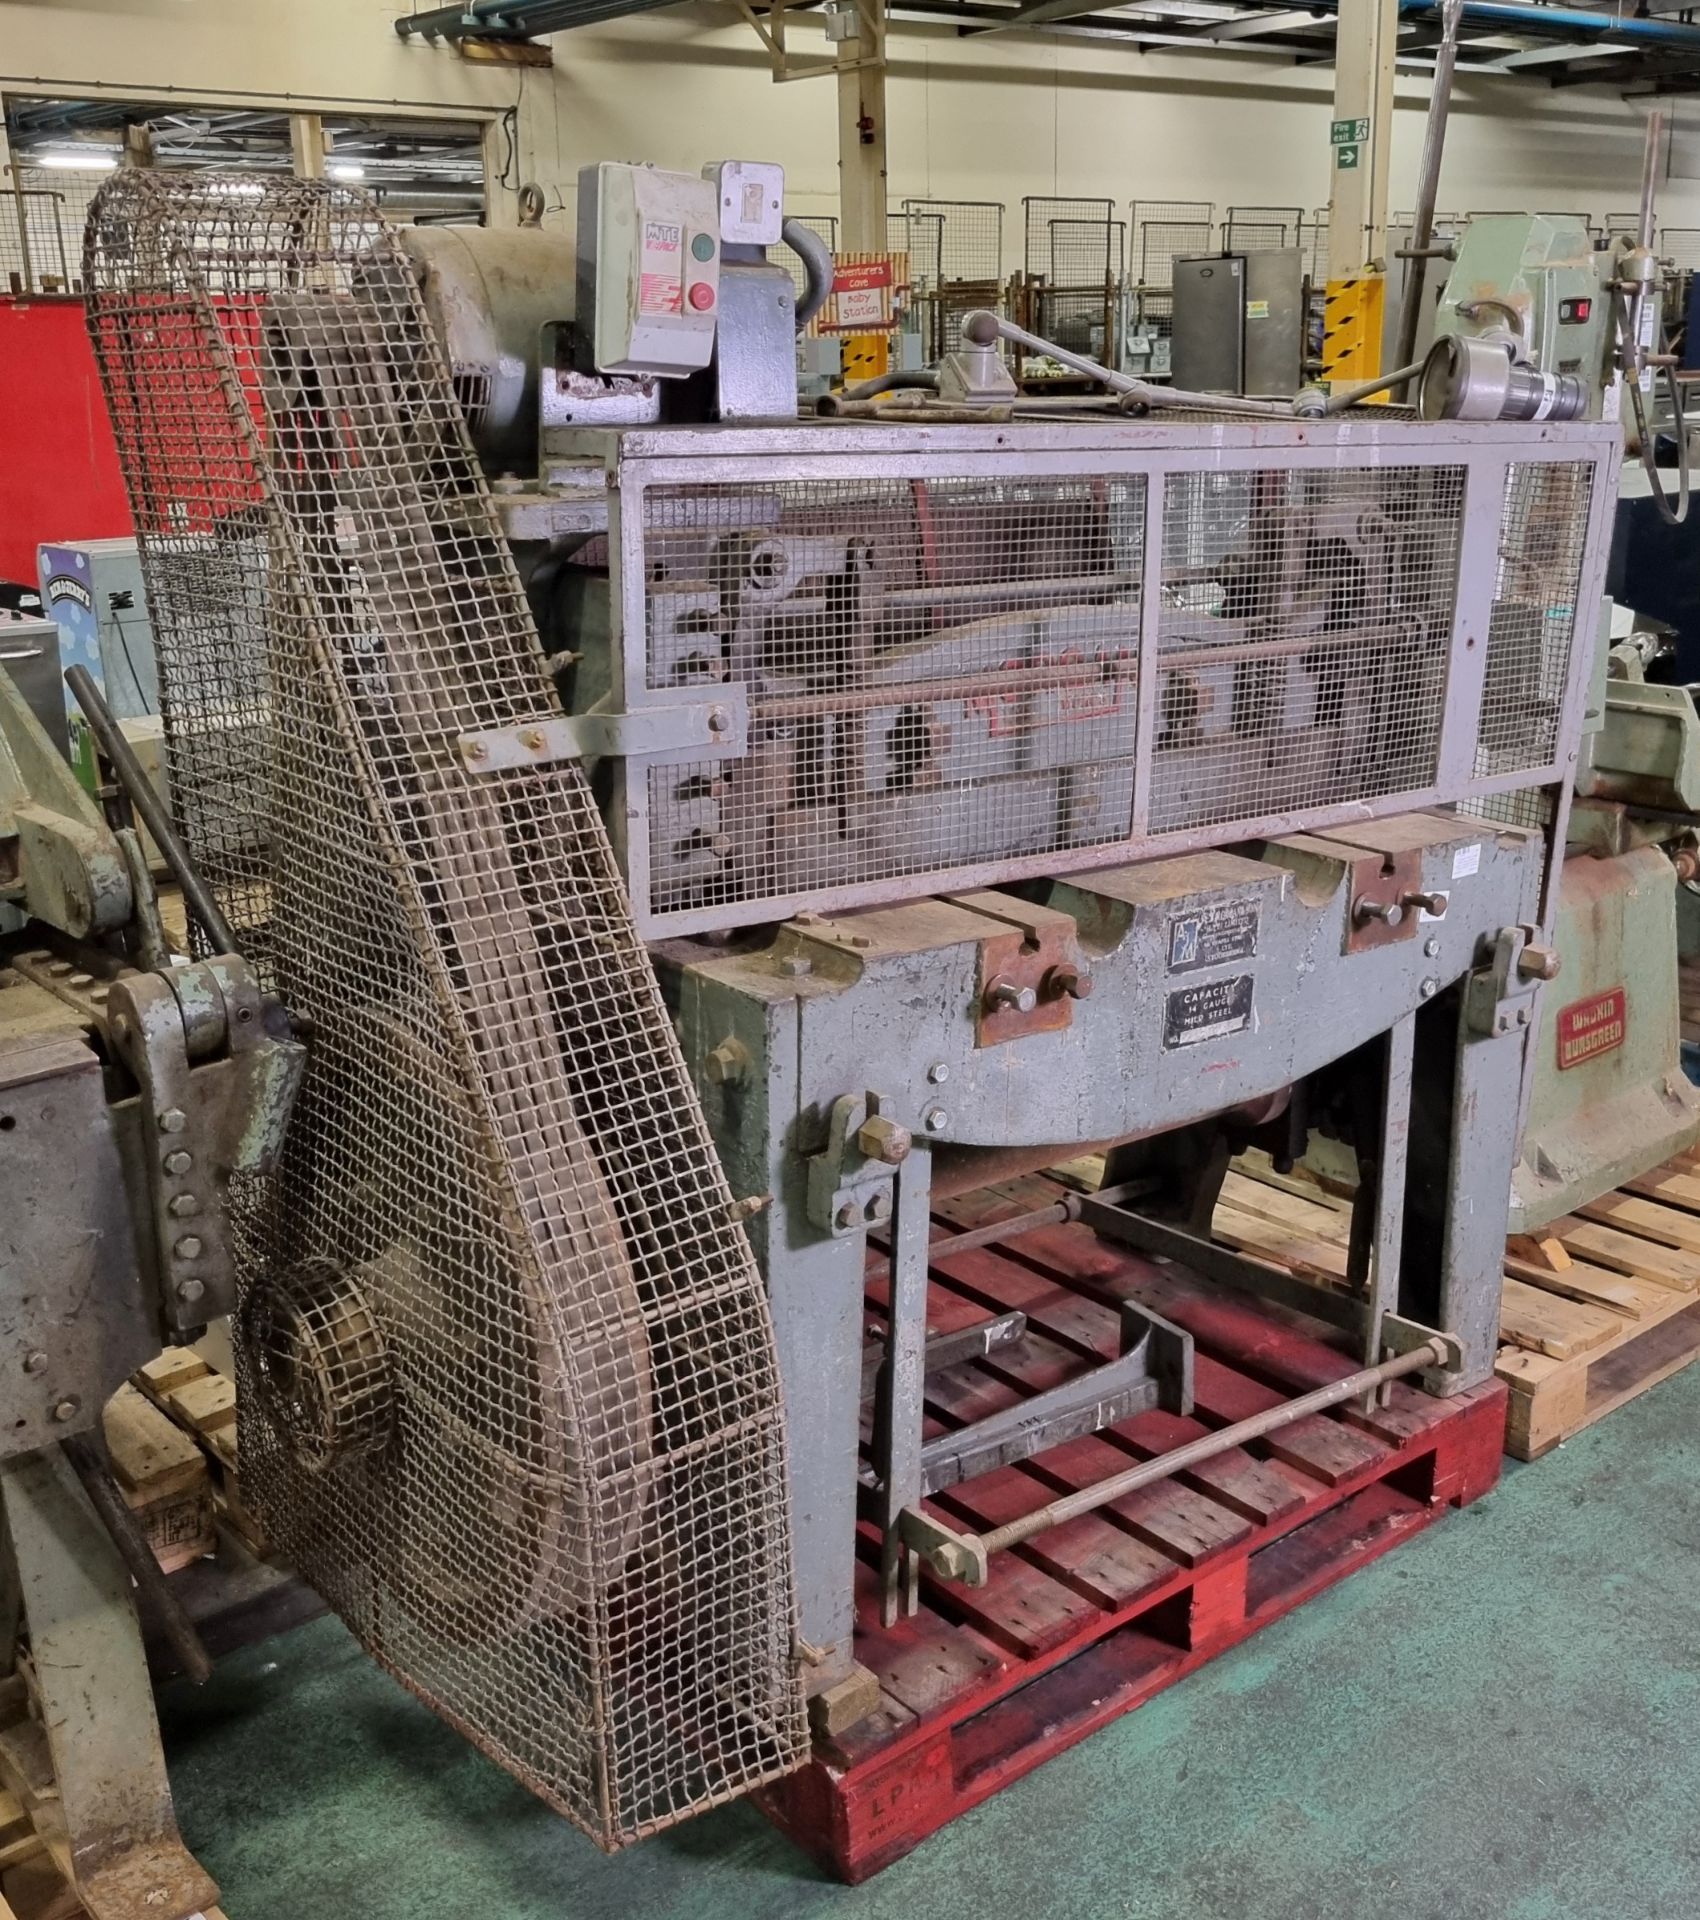 BMM Weston L1566 industrial laundry press - 440V - W 1650 x D 1000 x H 1350mm - Image 8 of 15